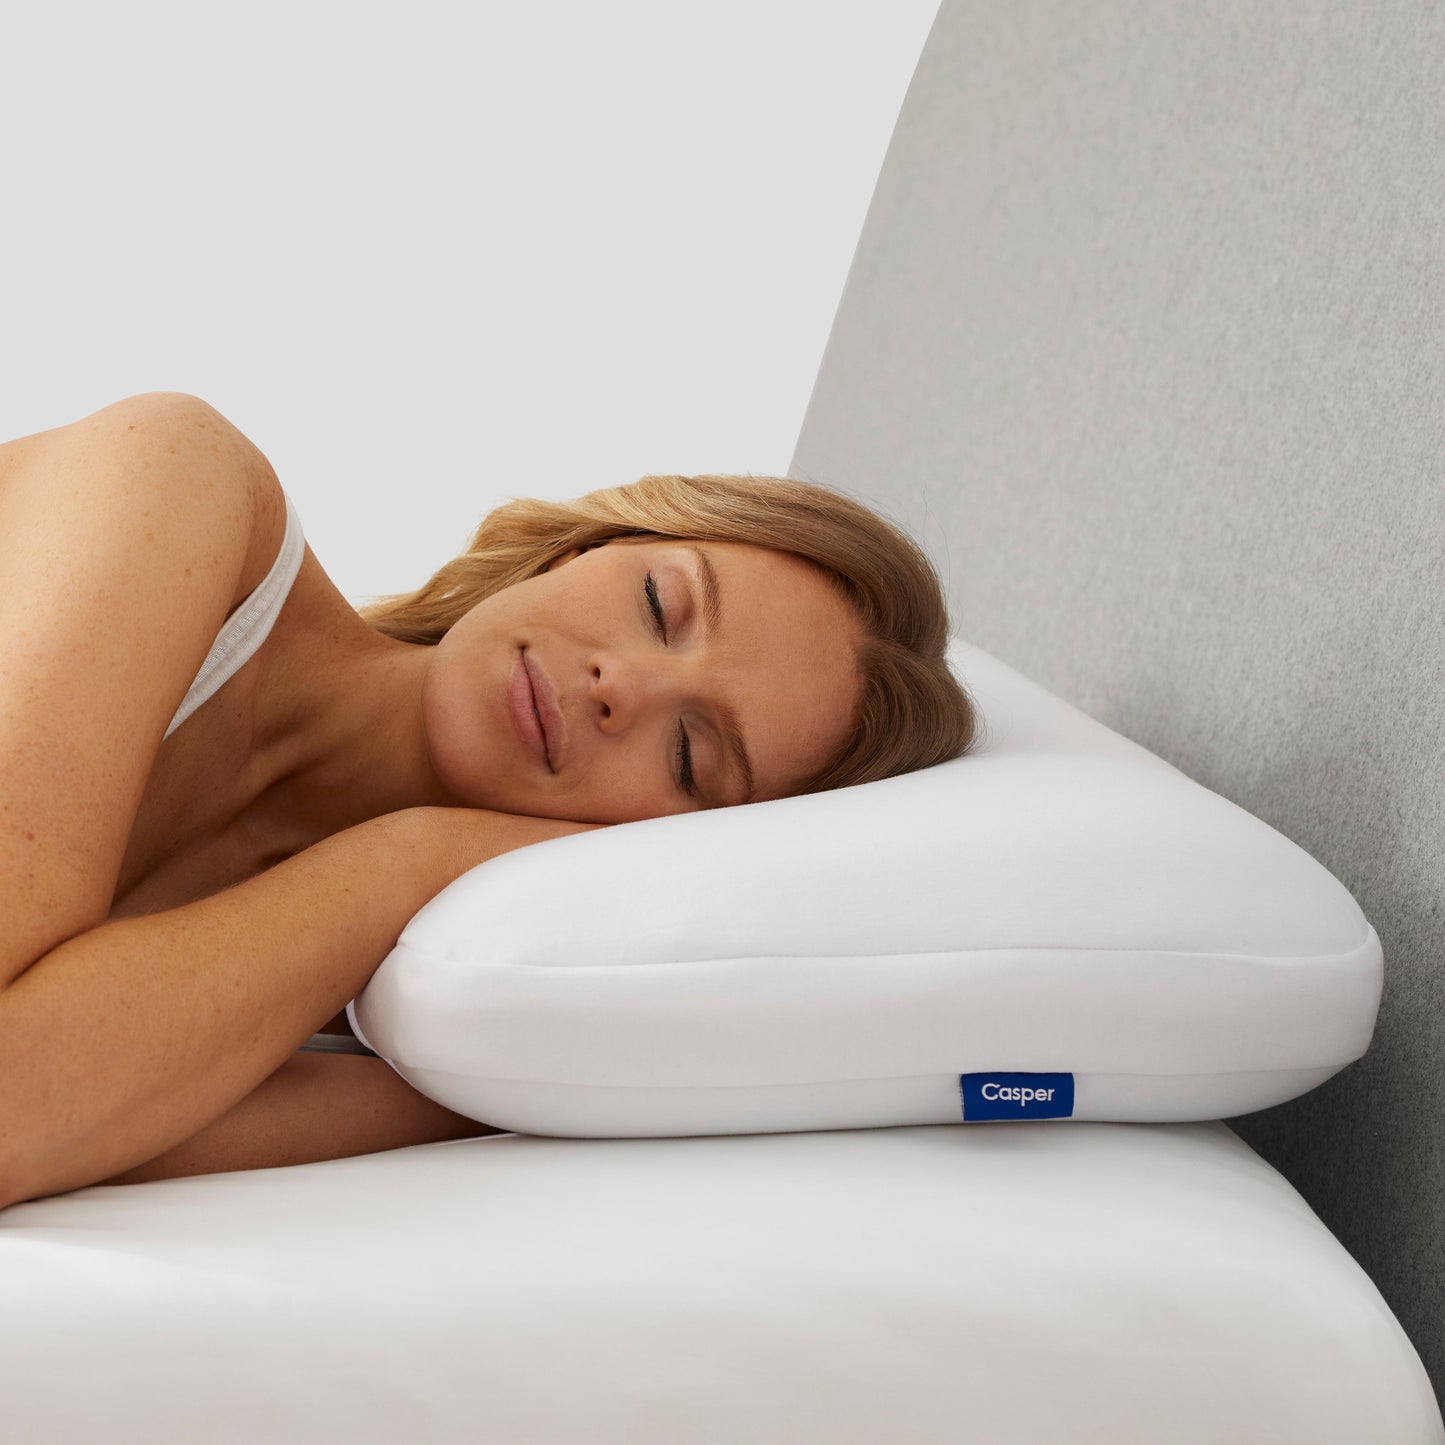 Woman Sleeping On Casper Hybrid Pillow